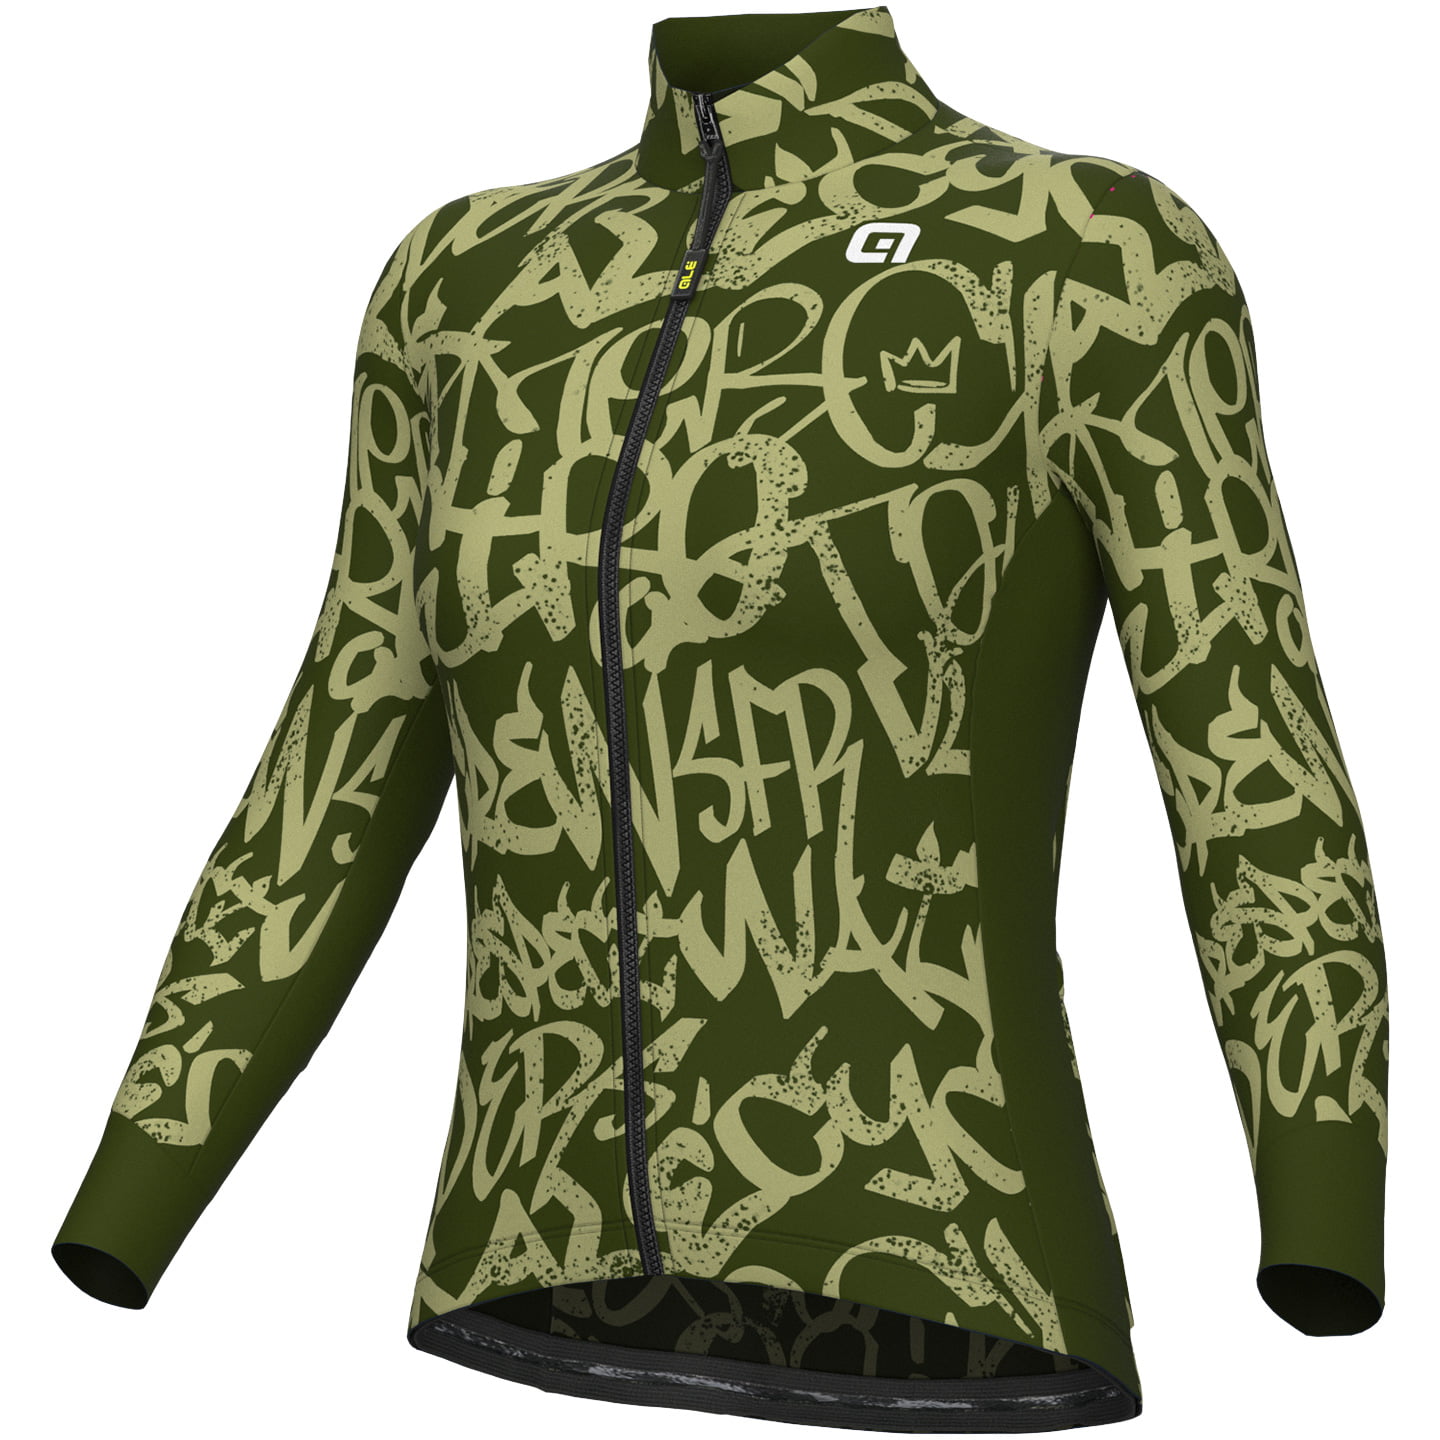 ALE Ride Women’s Jersey Jacket Jersey / Jacket, size S, Cycling jersey, Cycle gear